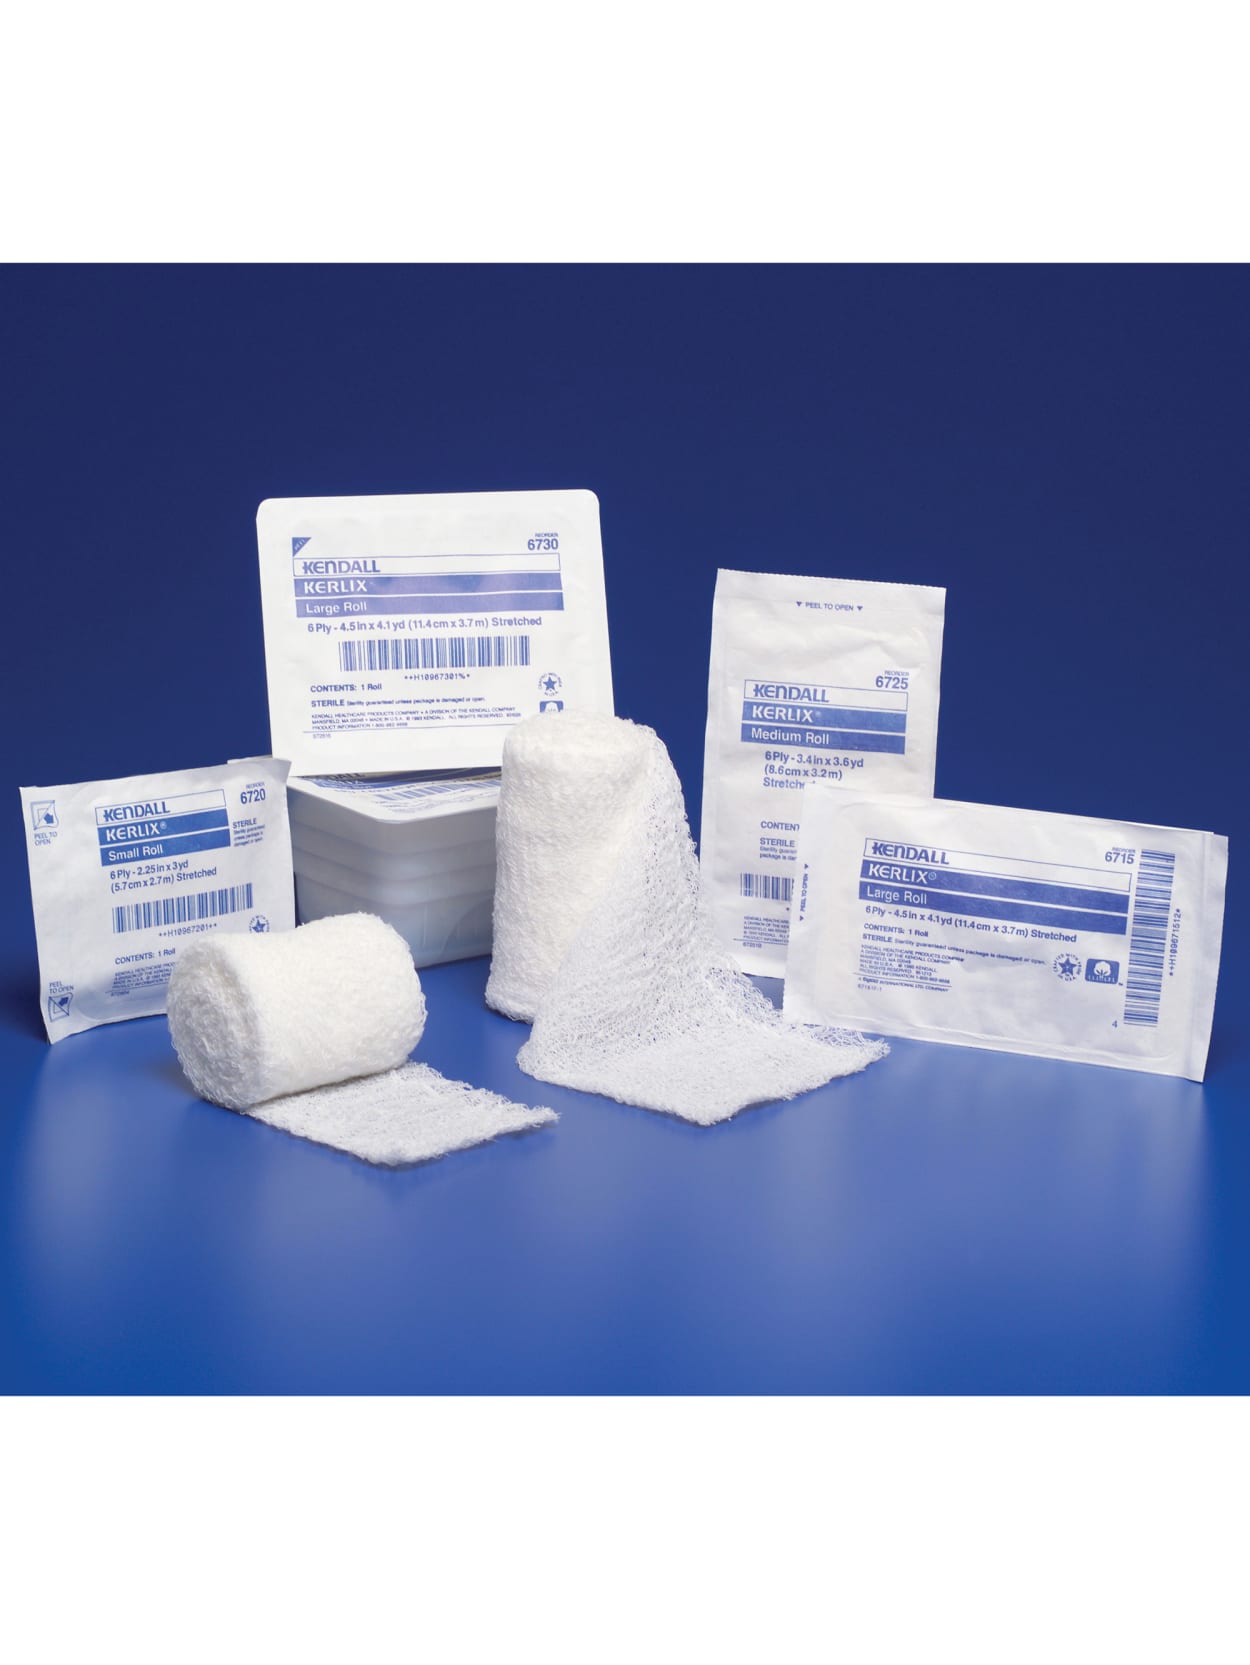 Covidien Kerlix Gauze Bandage Rolls Non Sterile Large 4 12 X 4 1 Yd 6 Ply Dispenser Pack Of 12 Office Depot